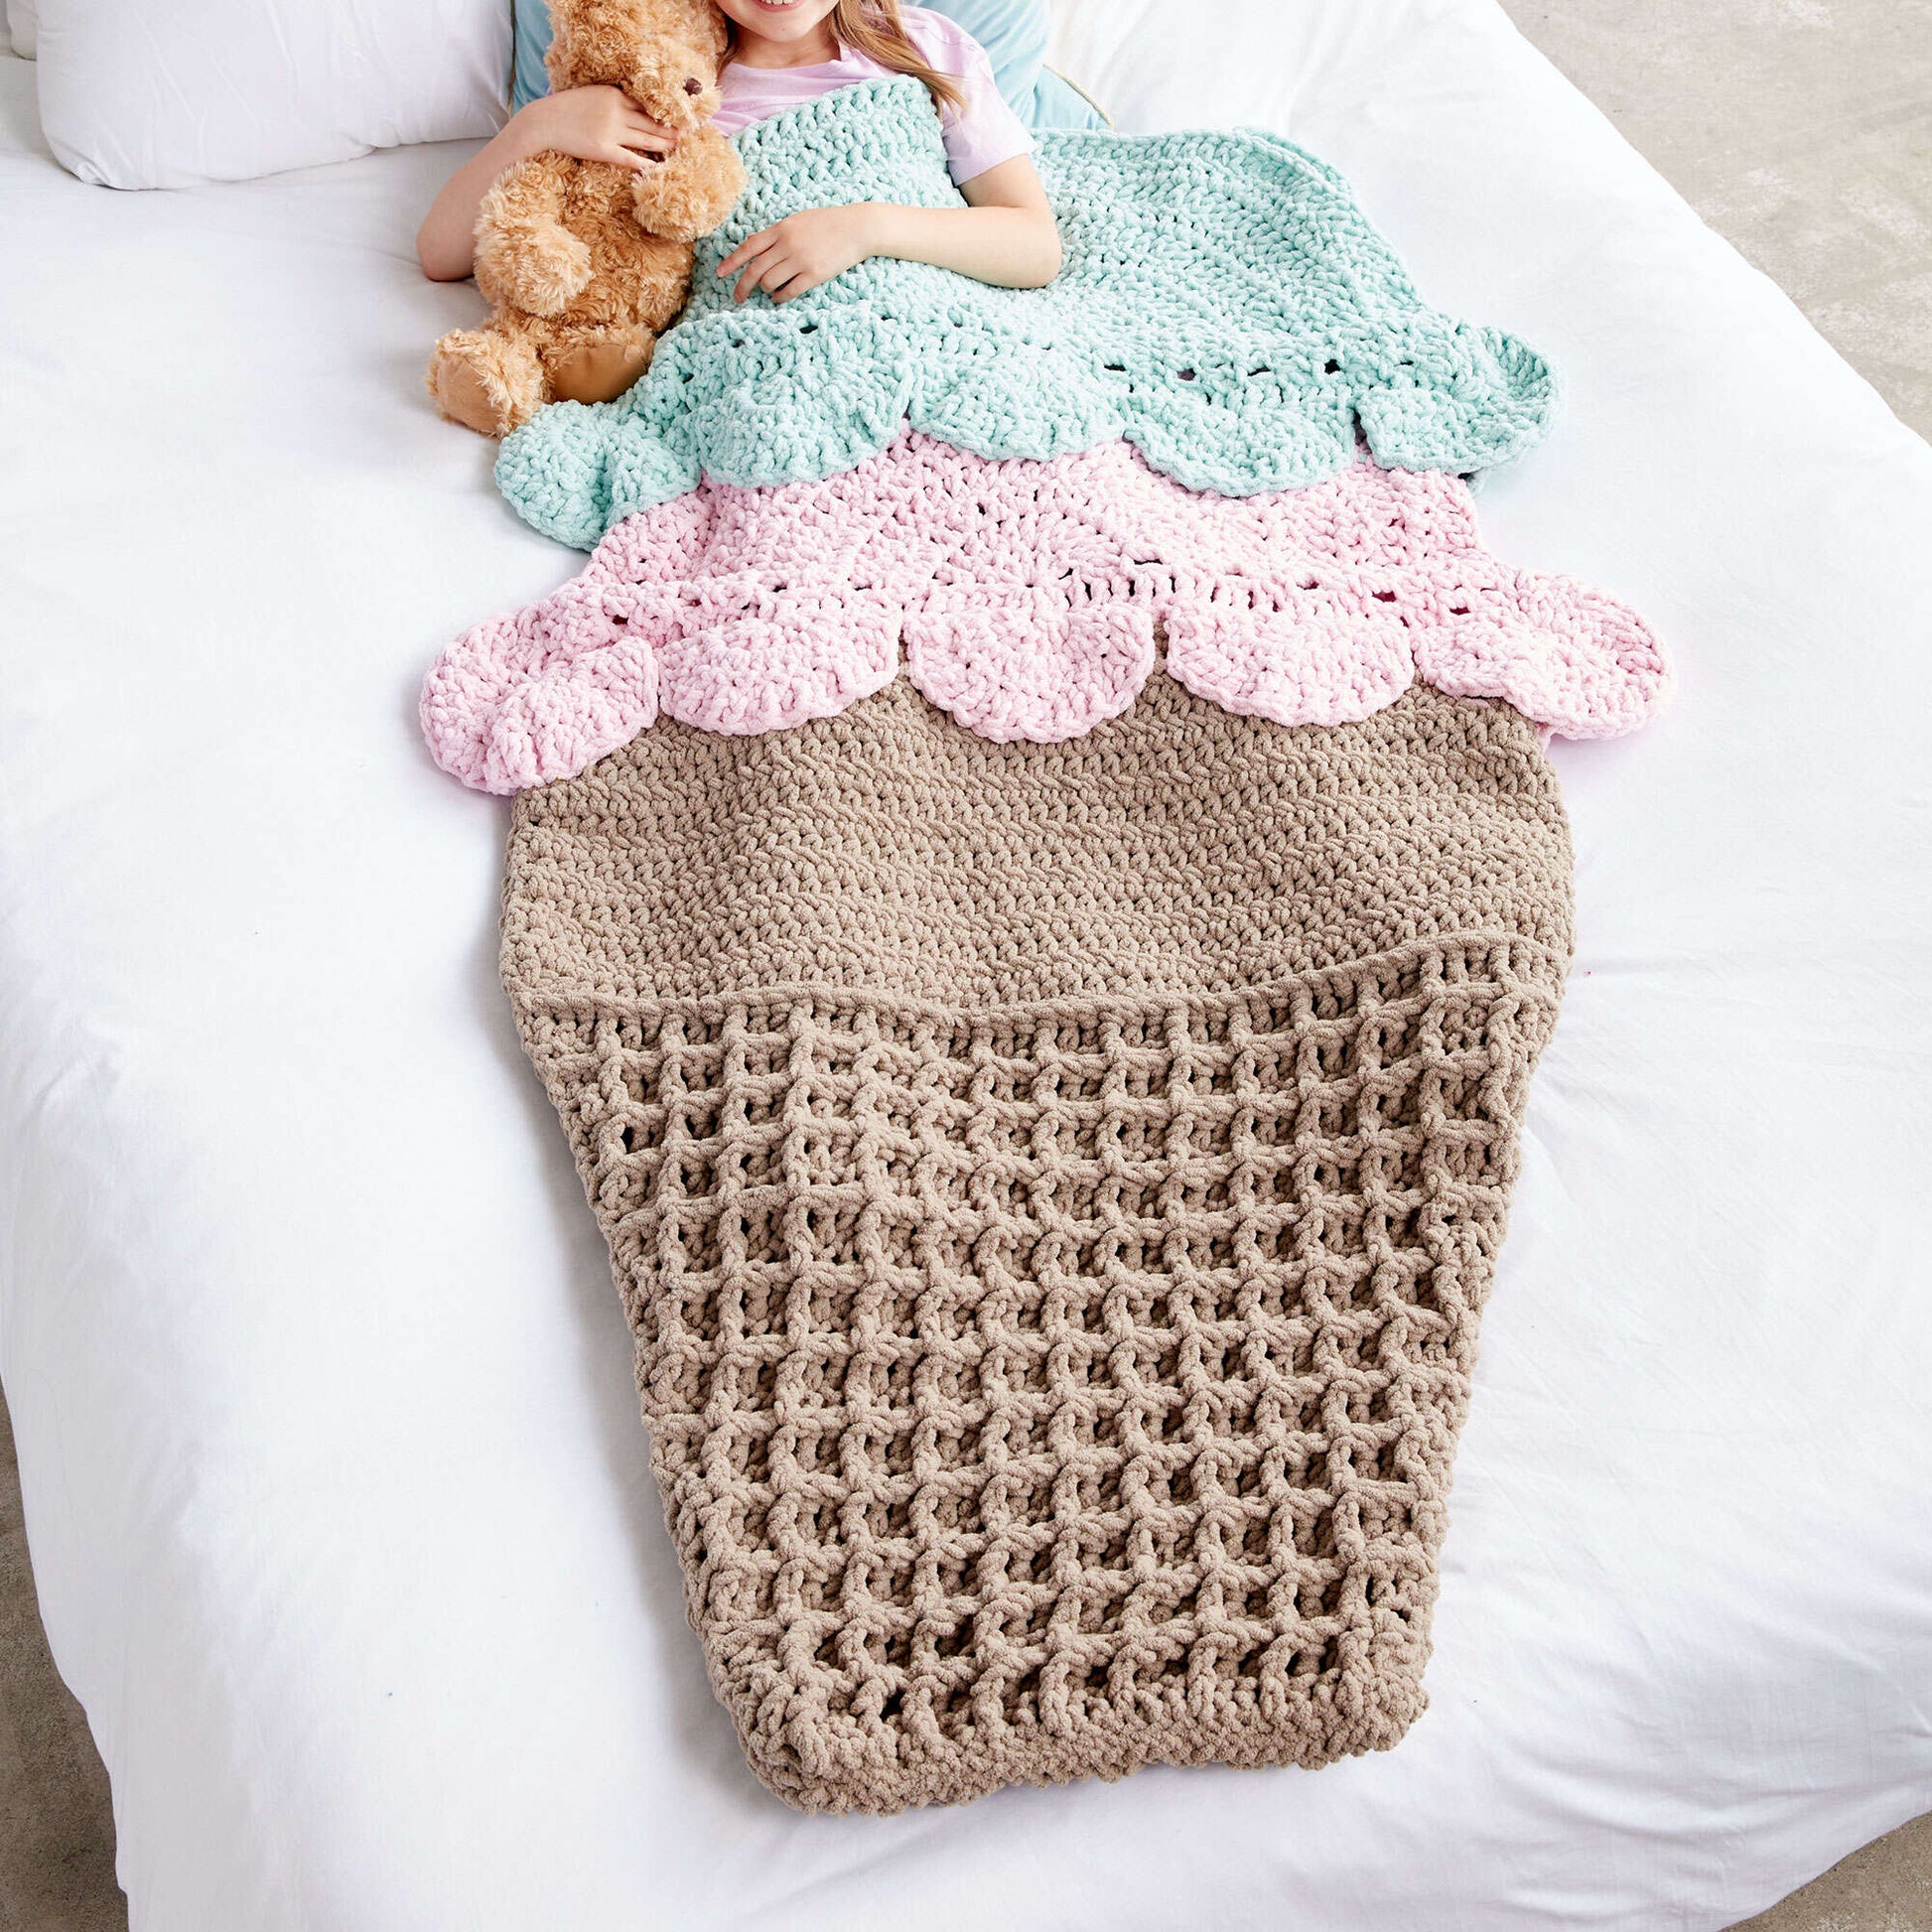 Bernat Double Scoop Crochet Snuggle Sack Crochet Blanket made in Bernat Baby Blanket yarn